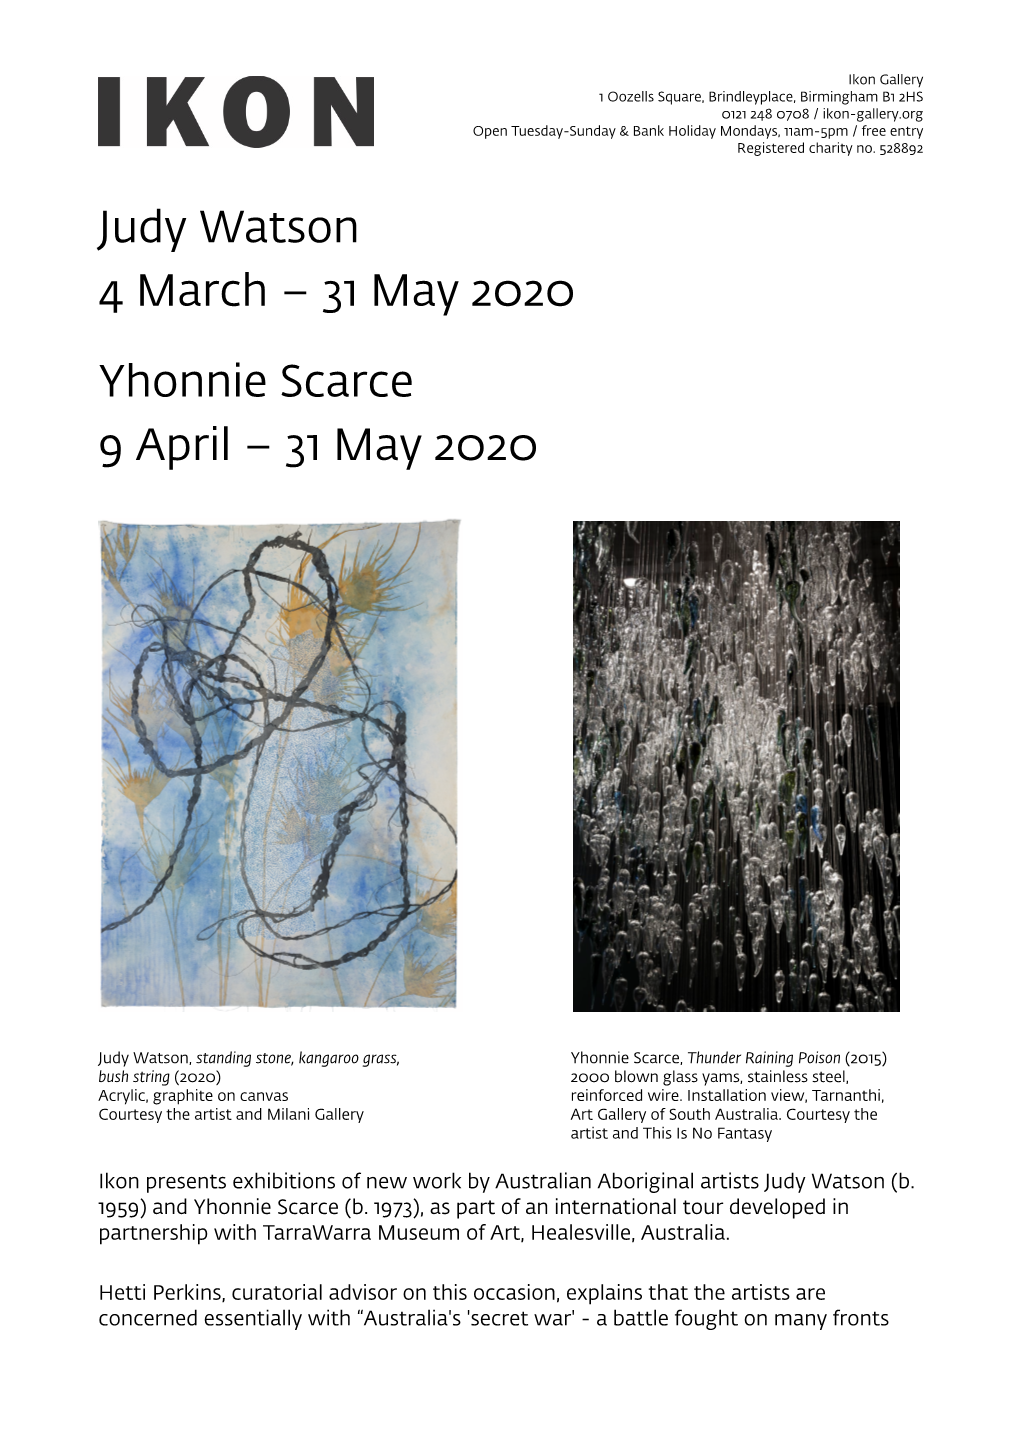 Judy Watson, 4 March – 31 May 2020; Yhonnie Scarce, 9 April – 31 May 2020